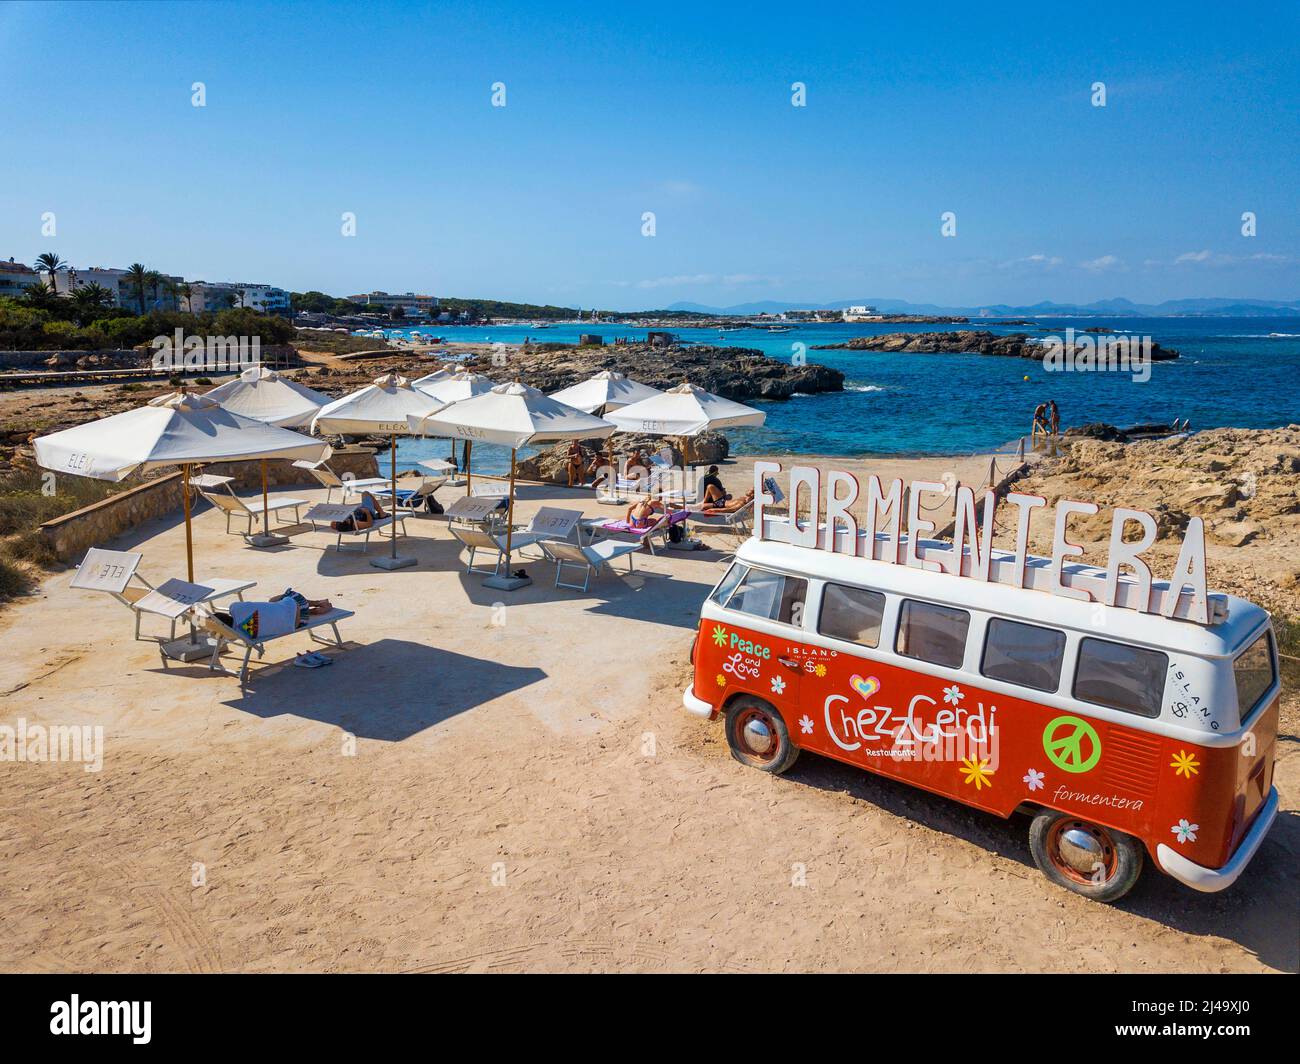 Classic Volkswagen red and white Type 2 camper van on Es Pujols beach, Chezz Gerdi bar beach restaurant advertising, Balearis Islands, Formentera, Spa Stock Photo